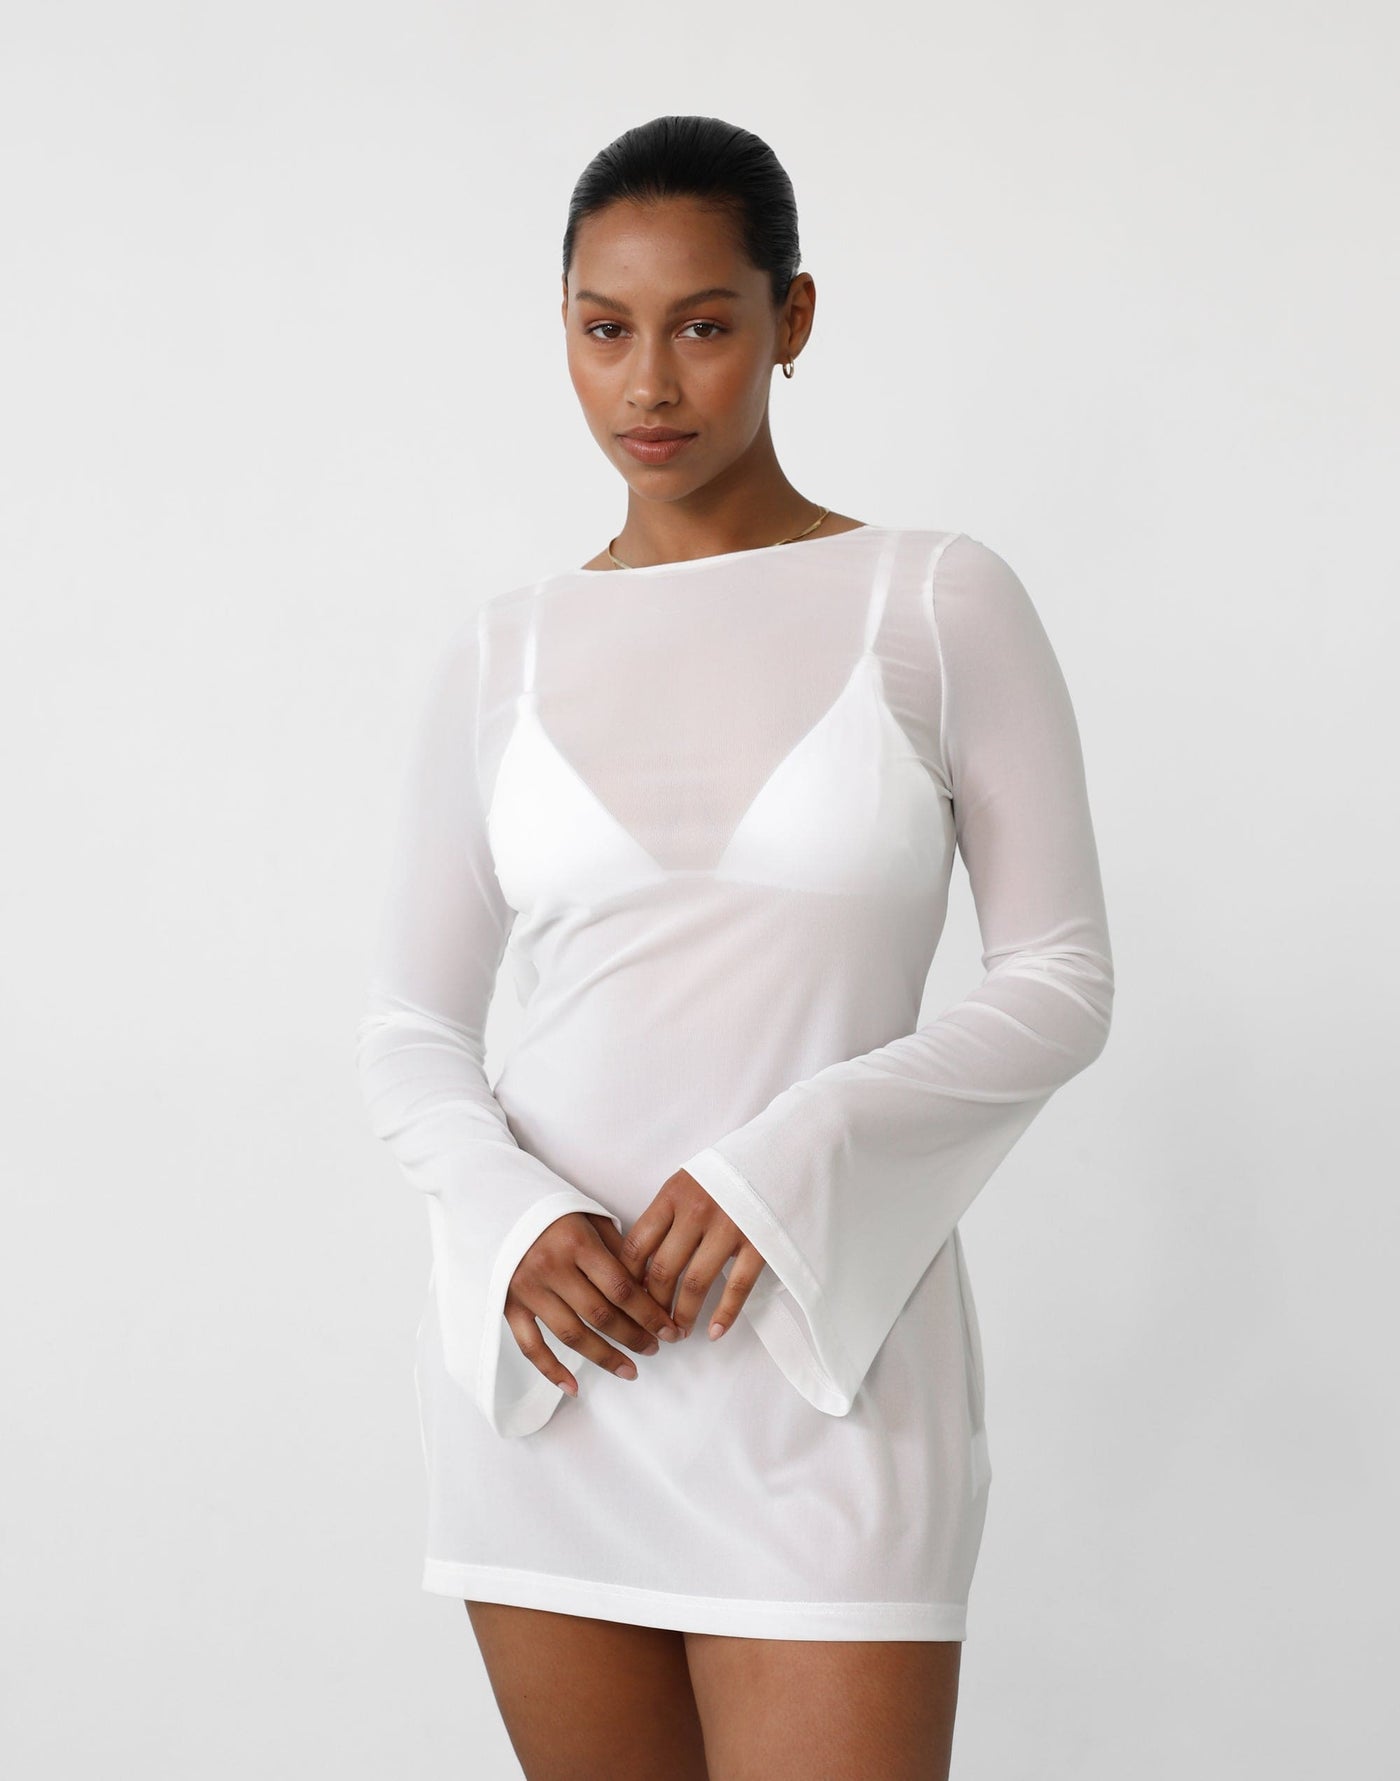 Make Waves Mini Dress (White) - White Mini Dress - Women's Top - Charcoal Clothing